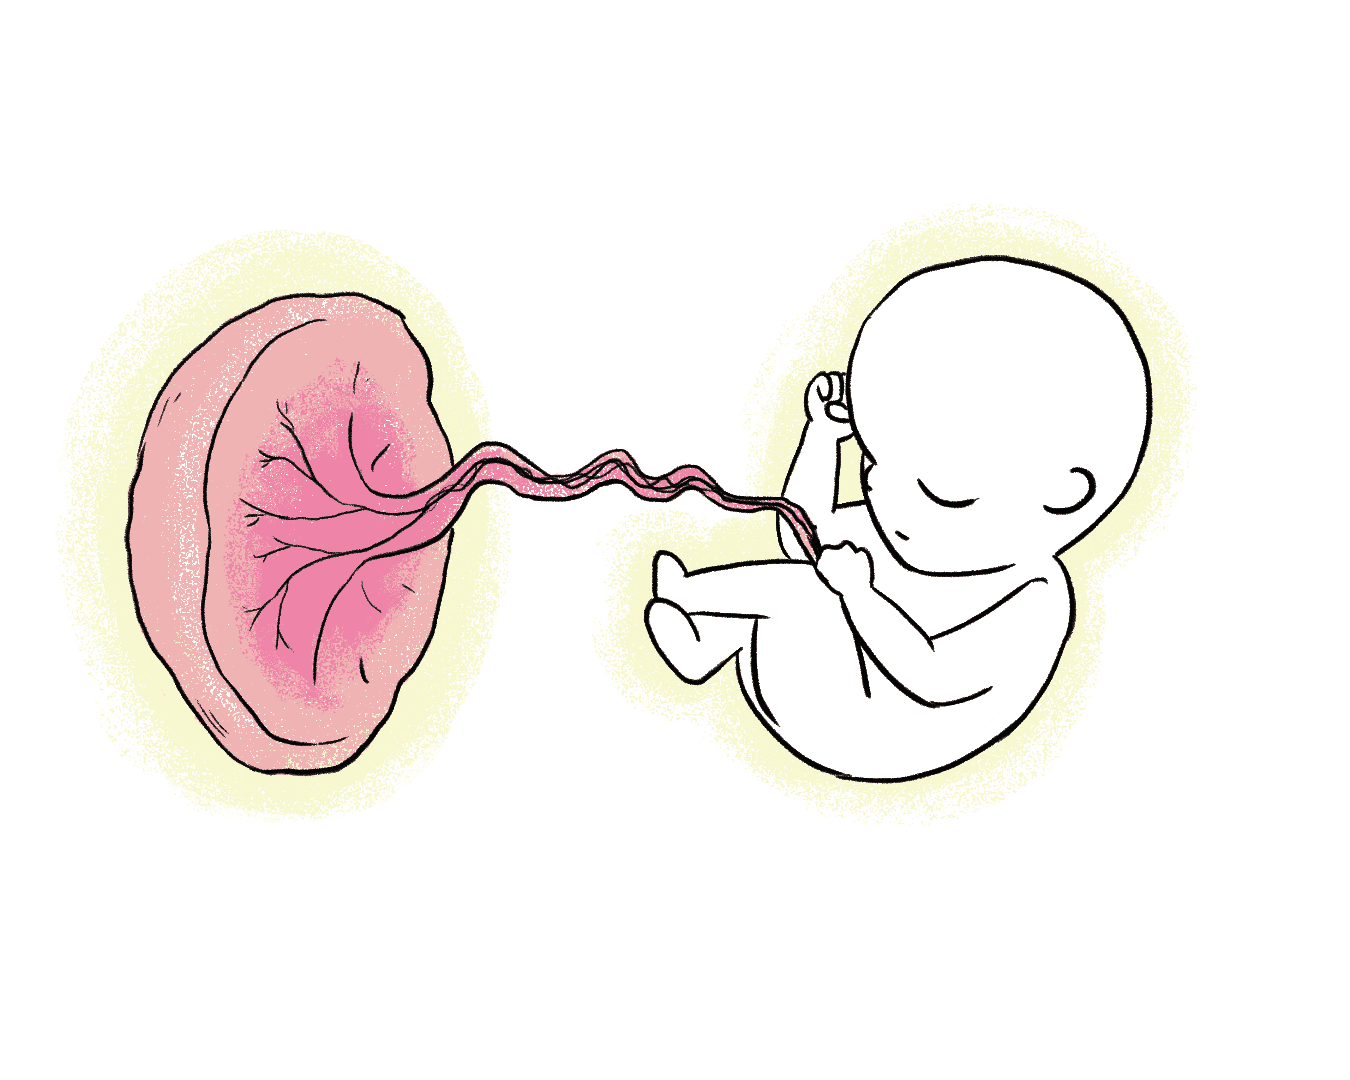 Placenta-featured-Image